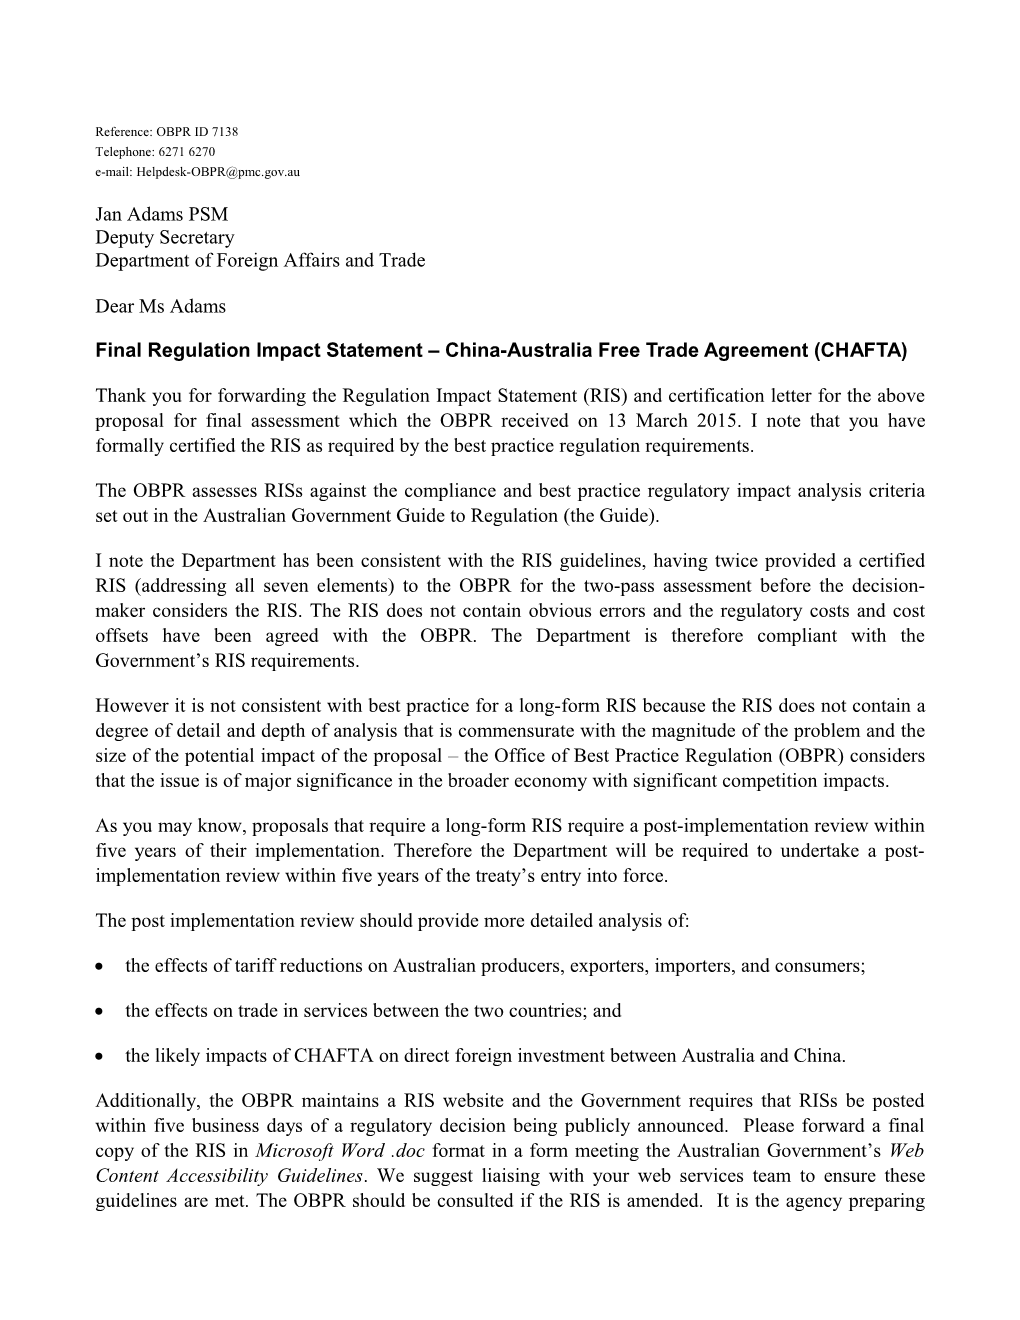 Finalregulation Impact Statement China-Australia Free Trade Agreement (CHAFTA)